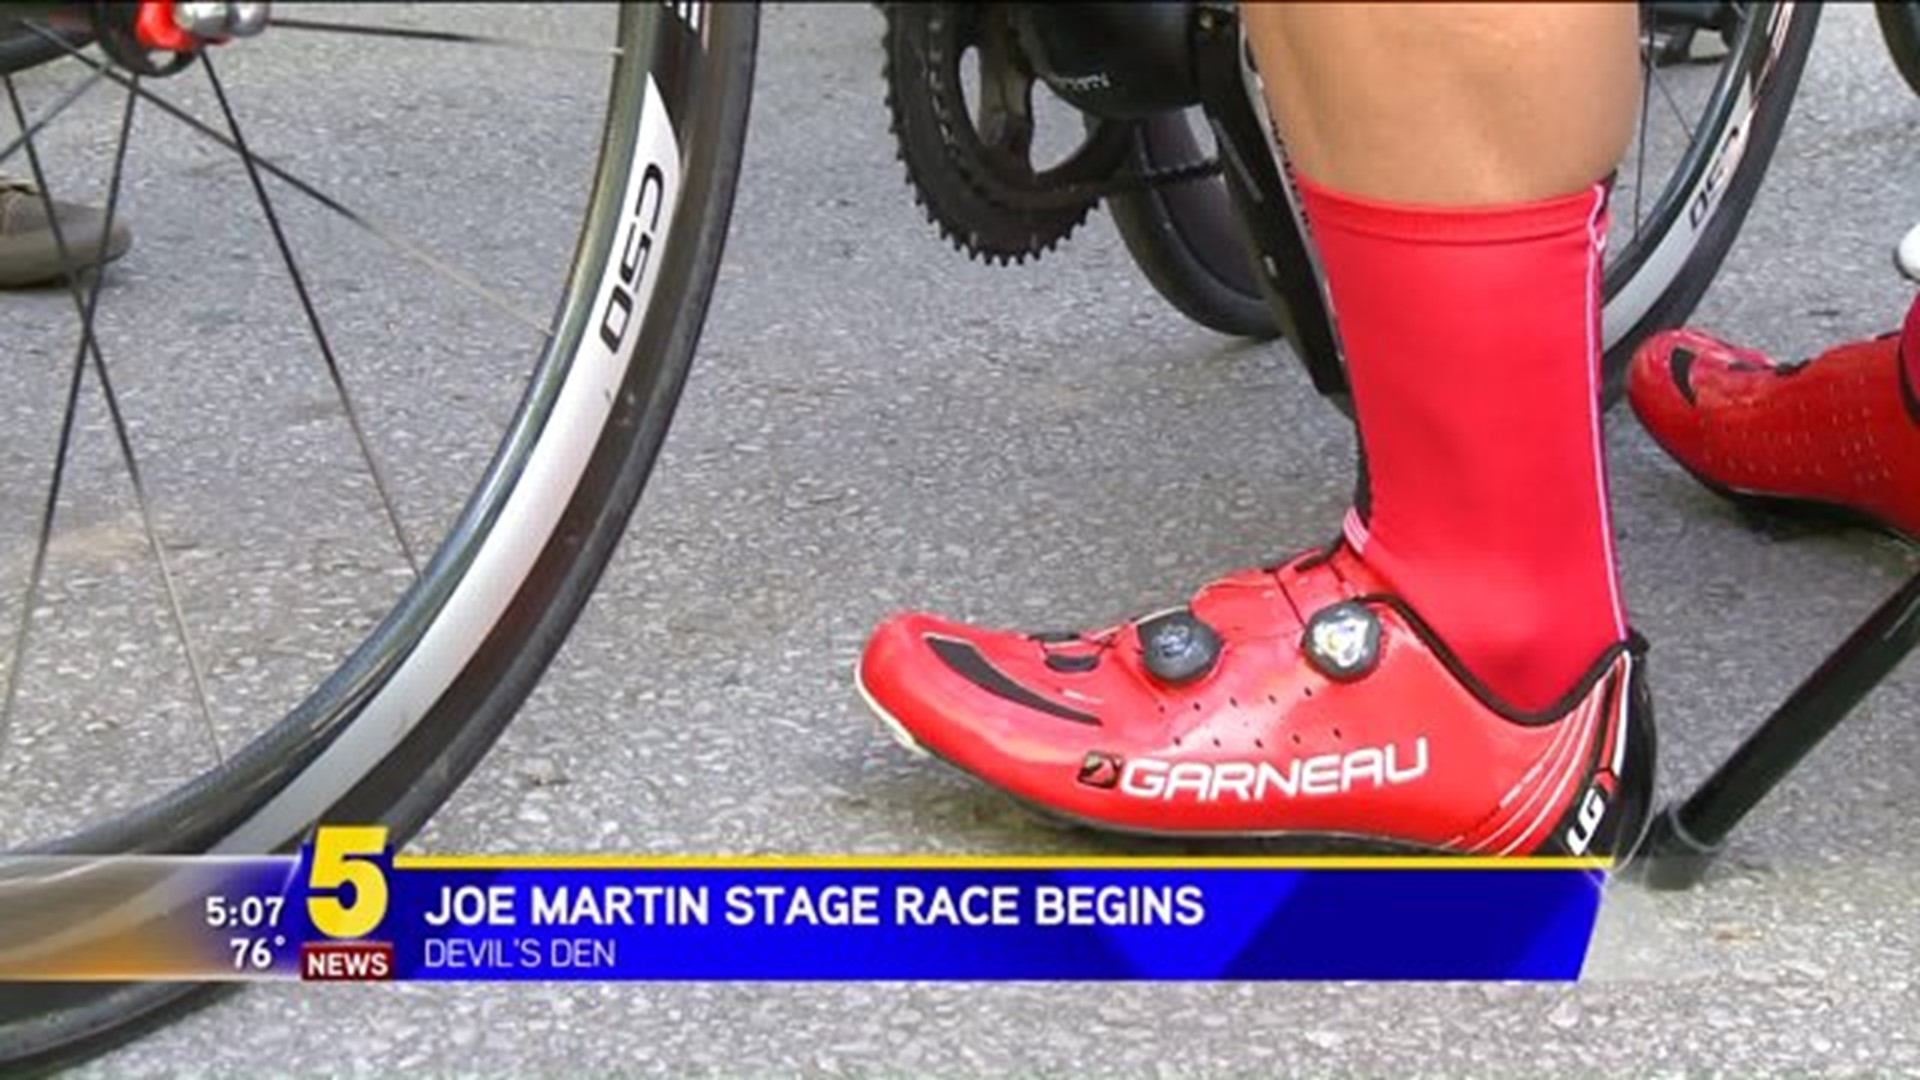 Joe Martin Stage Race Begins